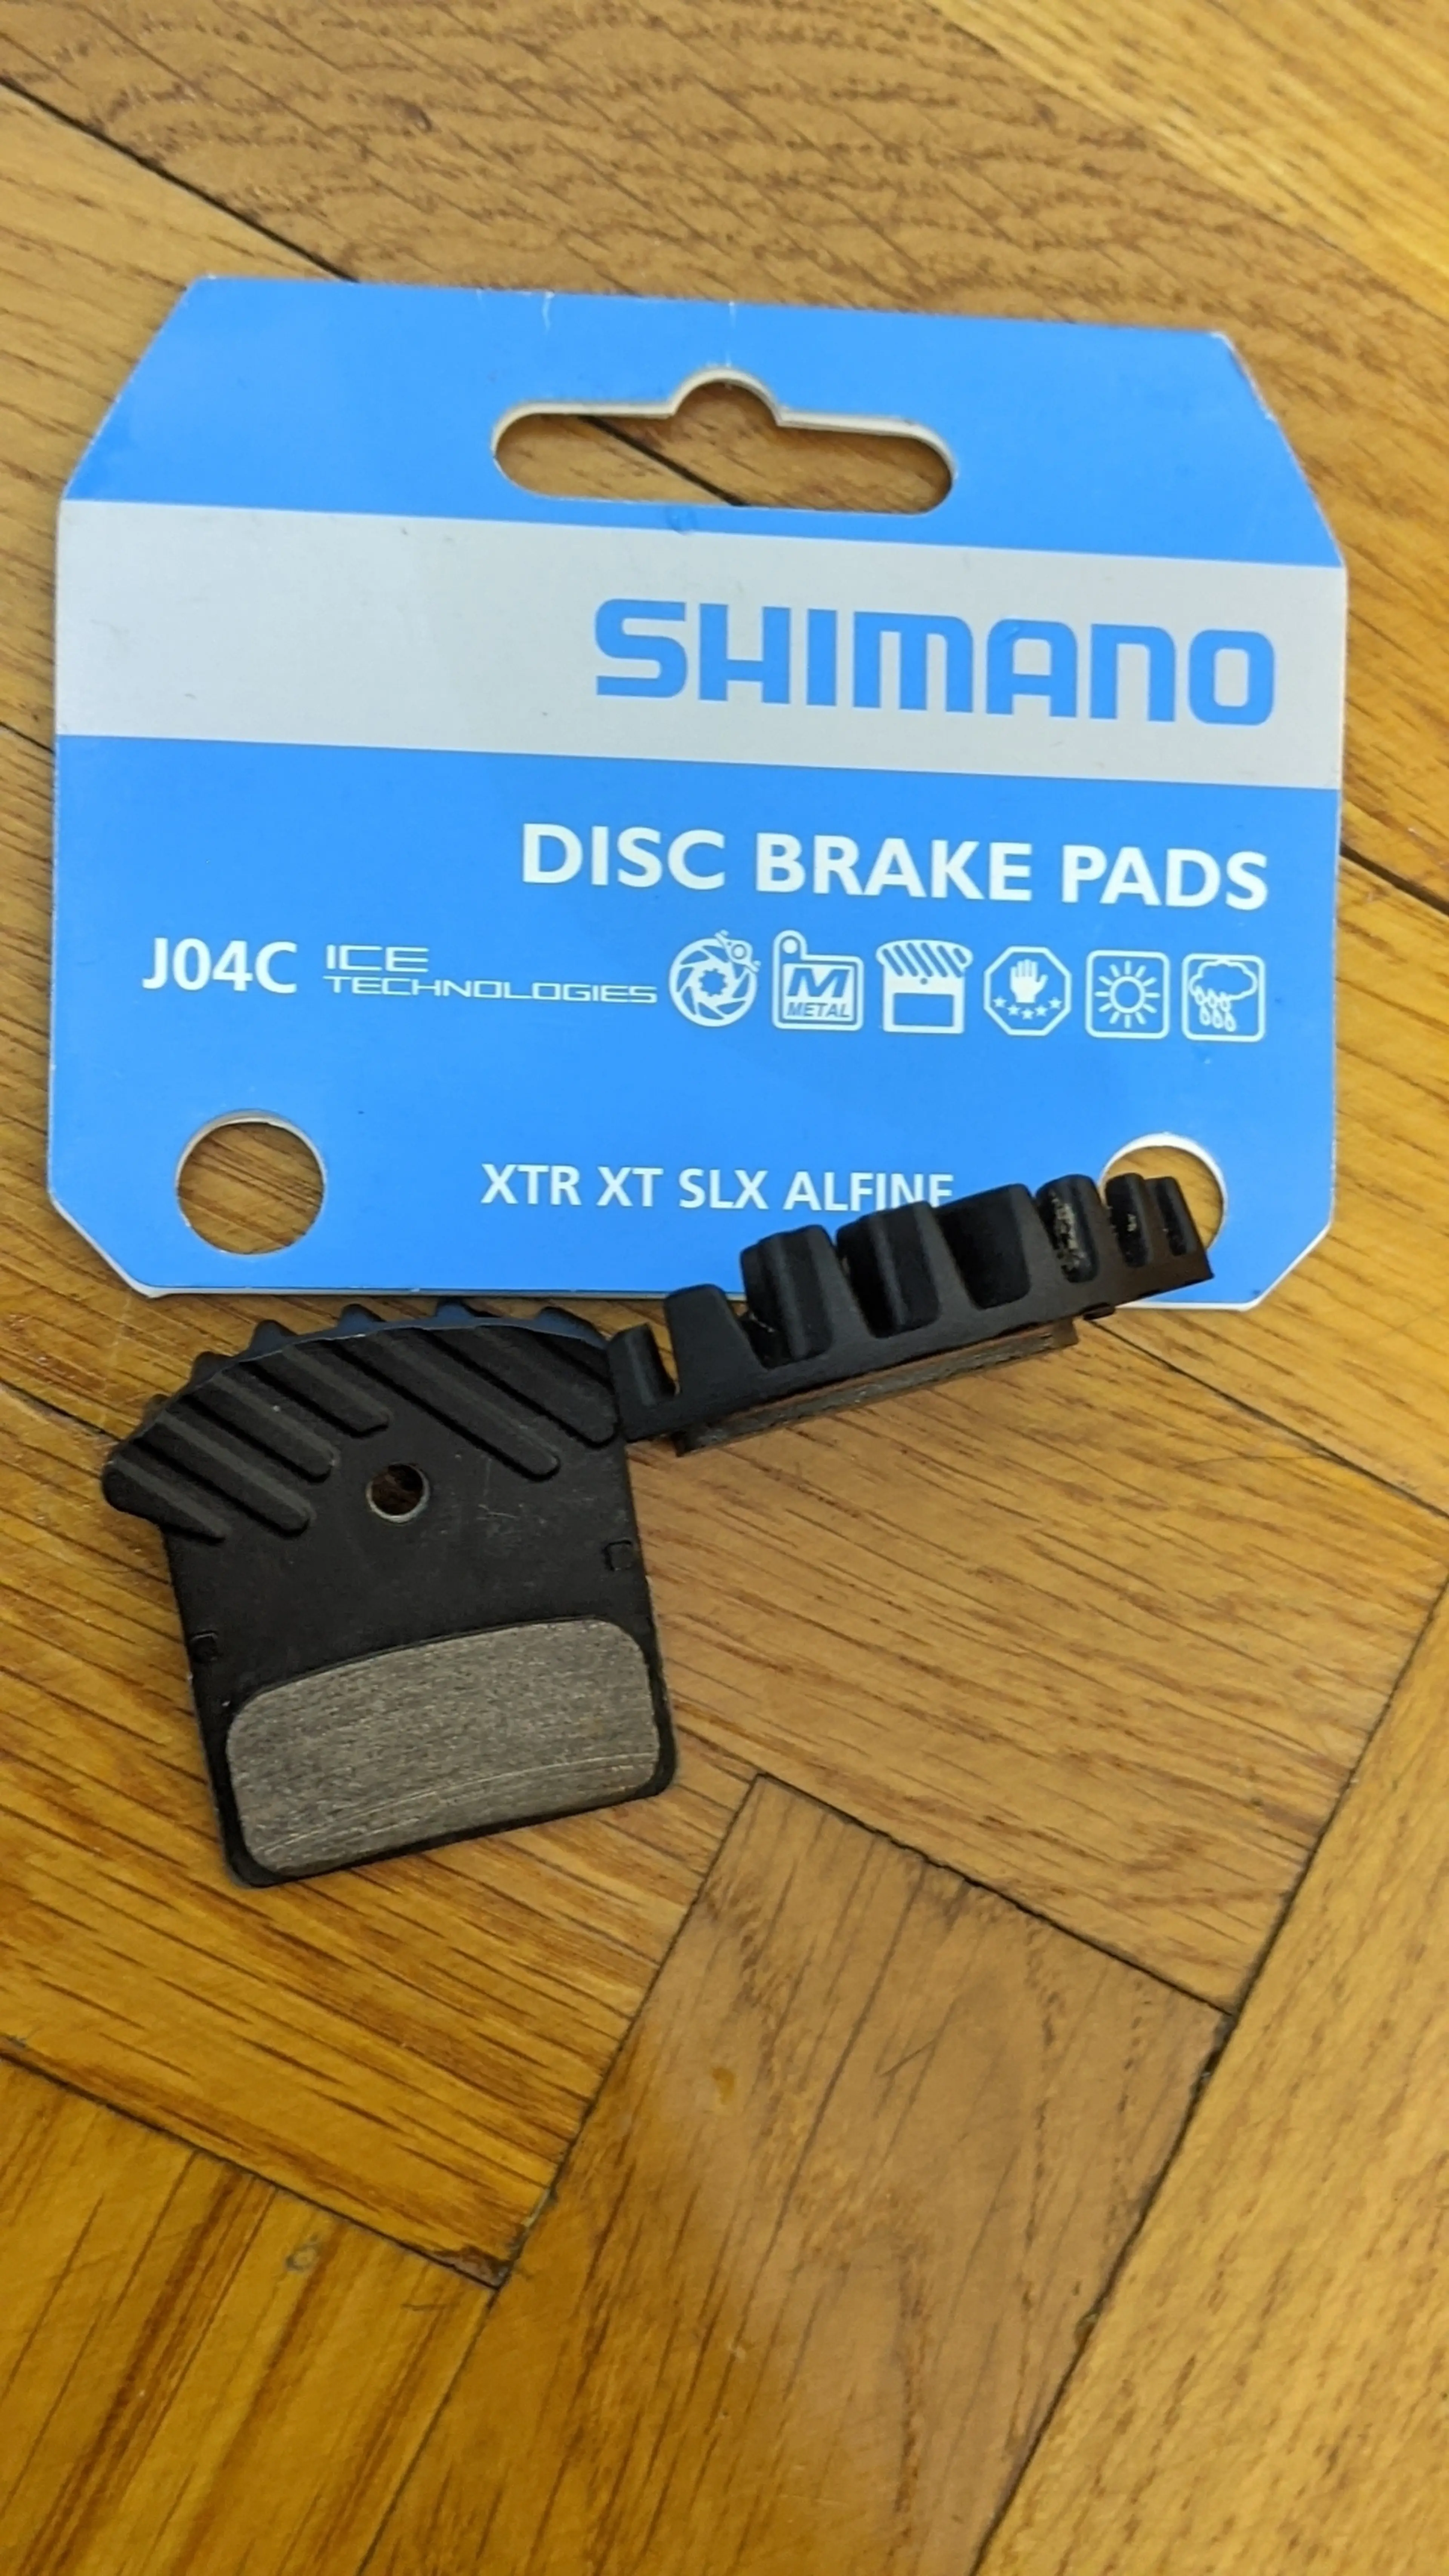 2. Placute de frana / brake pads Shimano J04C Metal